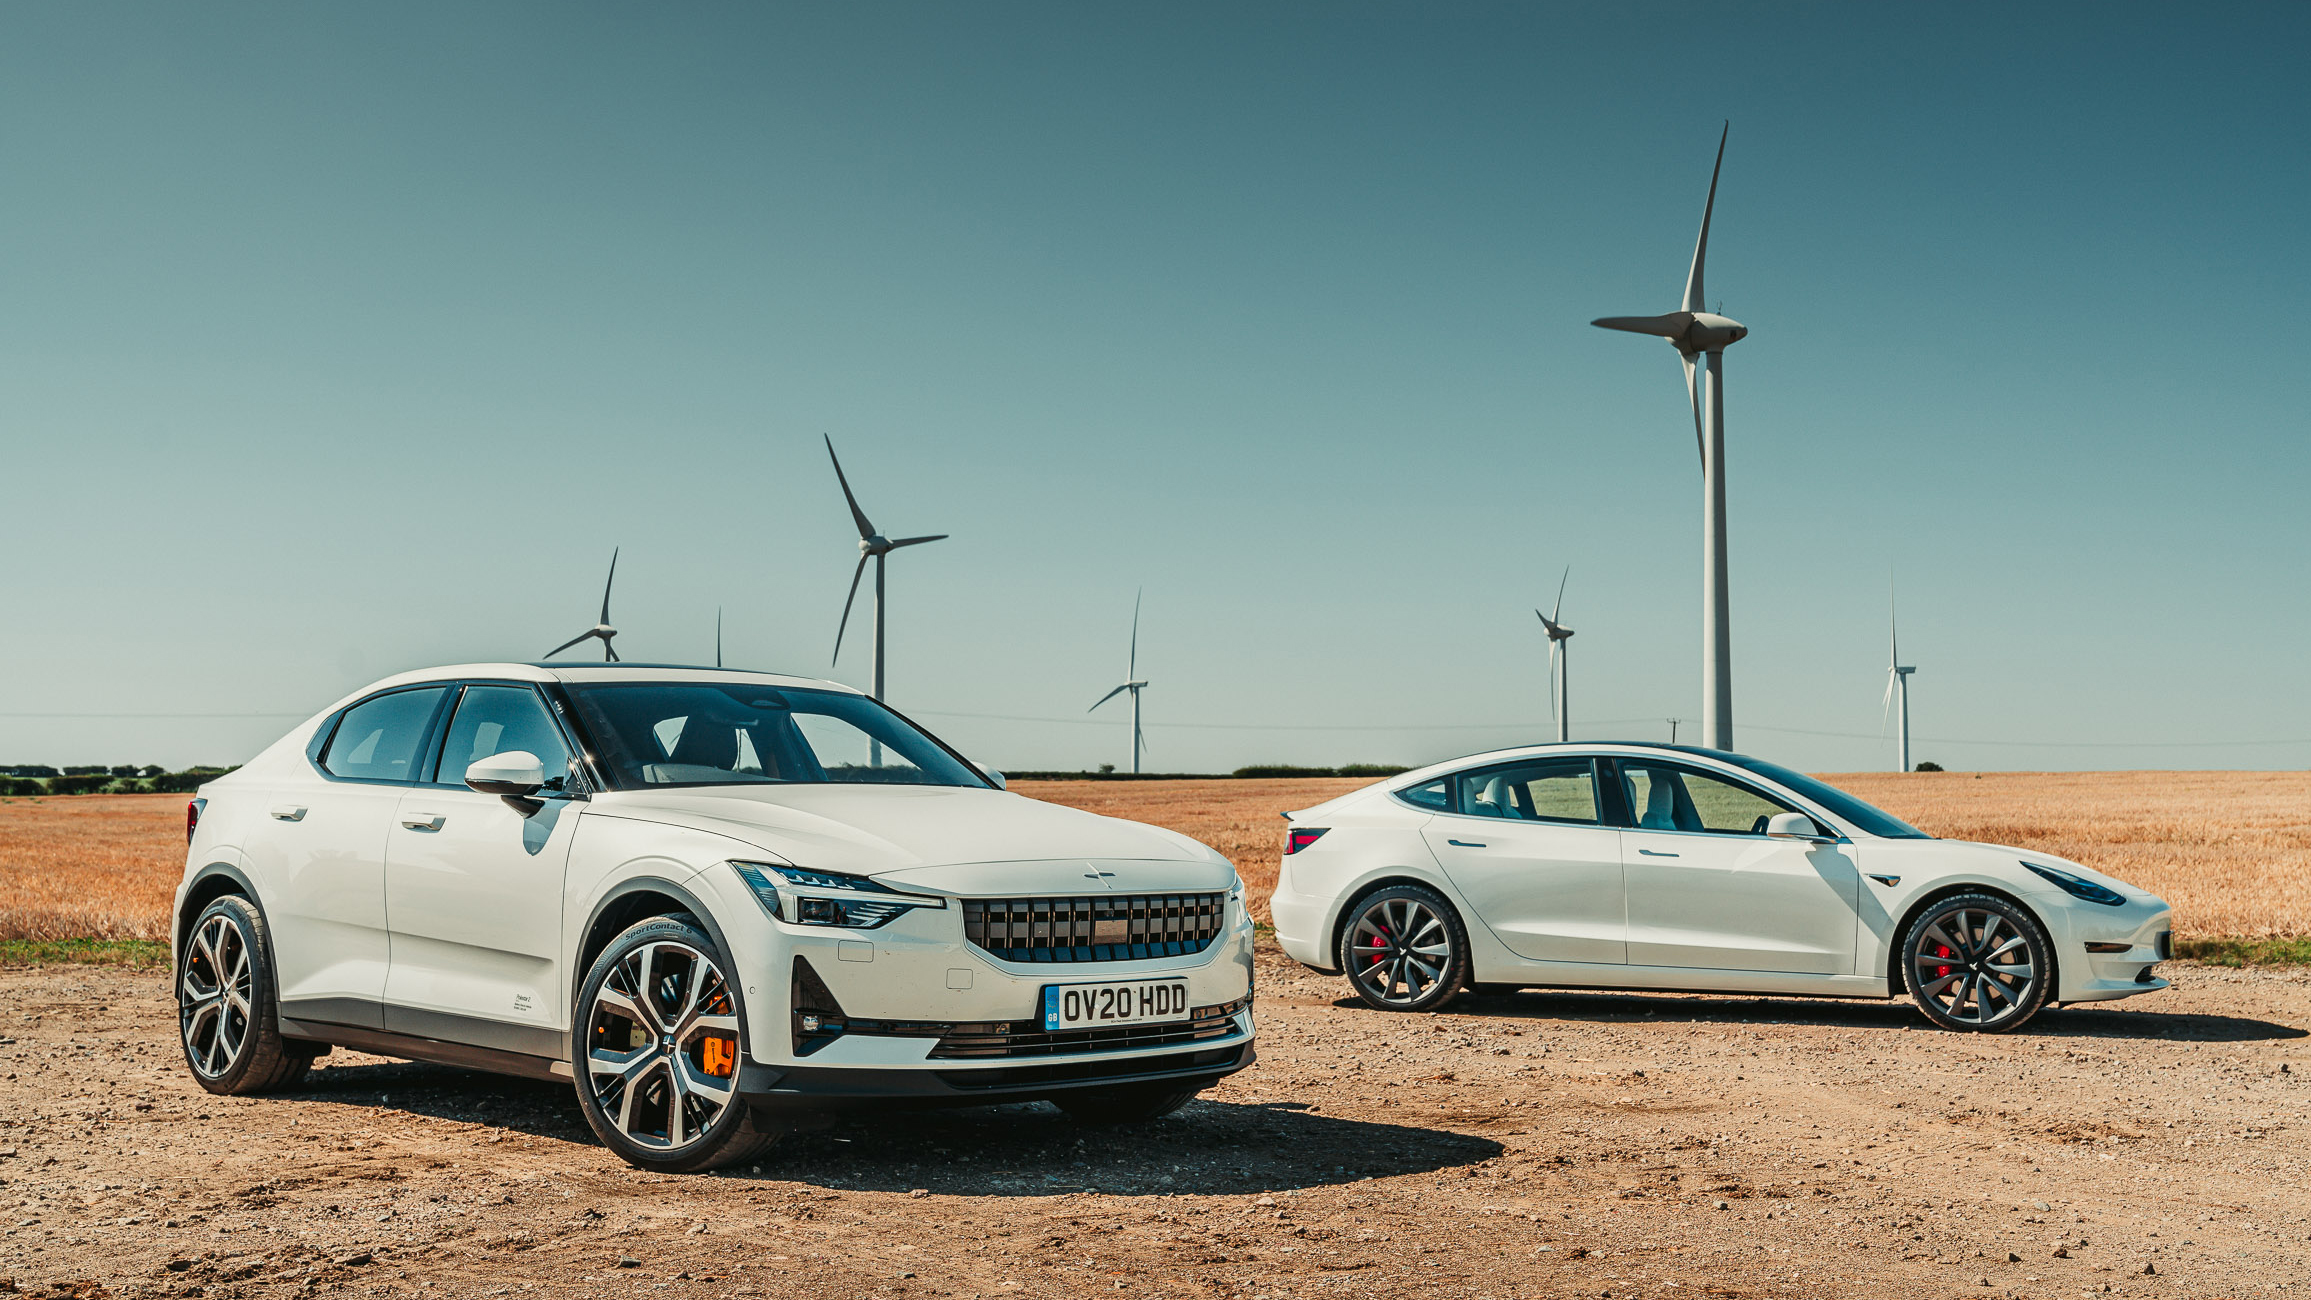 Tesla Model S vs. Polestar 2: Which Premium Electric Car Offers More Value?